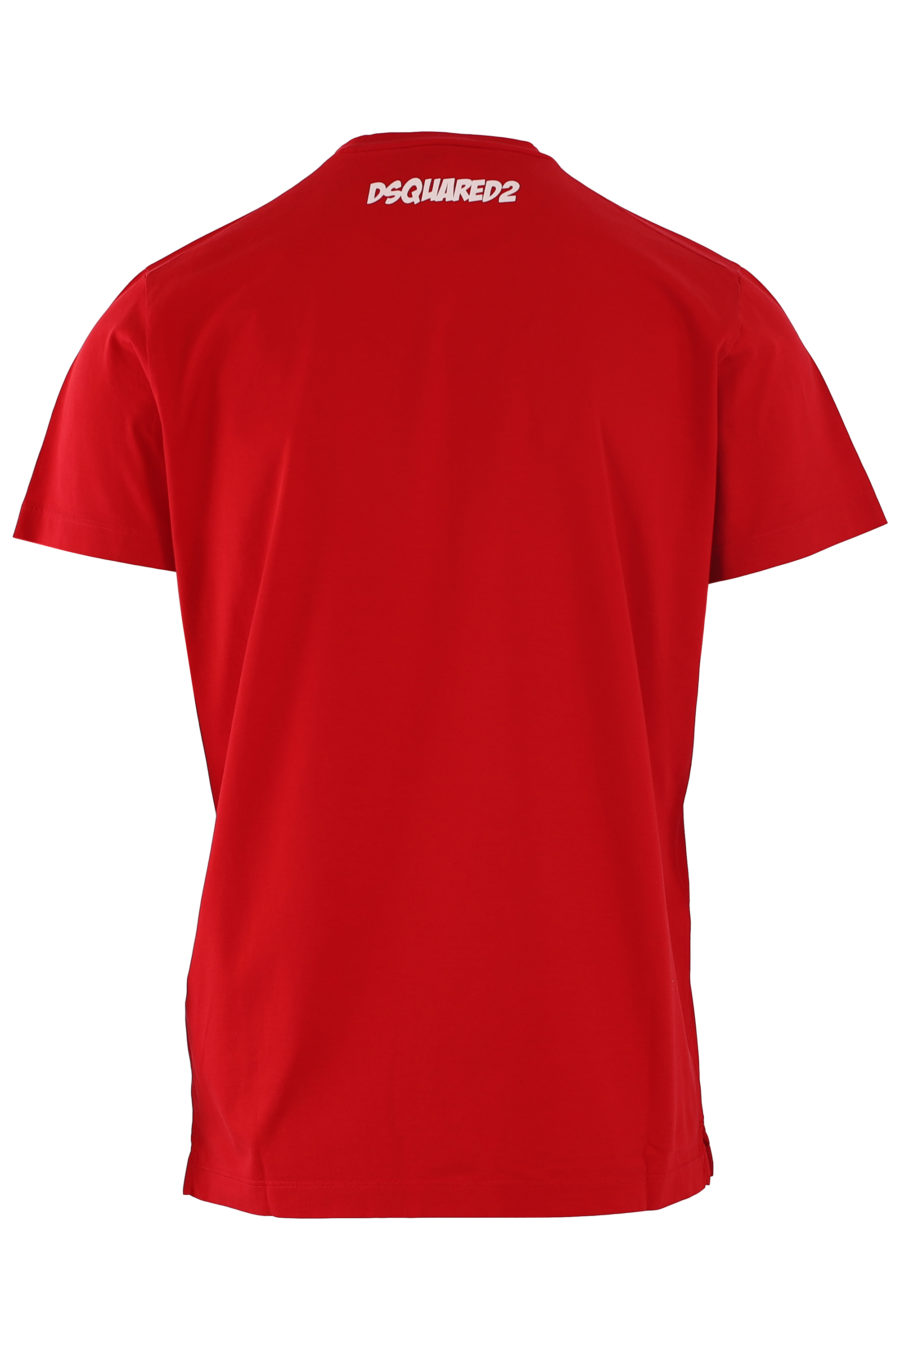 Camiseta roja "satisfacktion guaranteed2" - IMG 6818